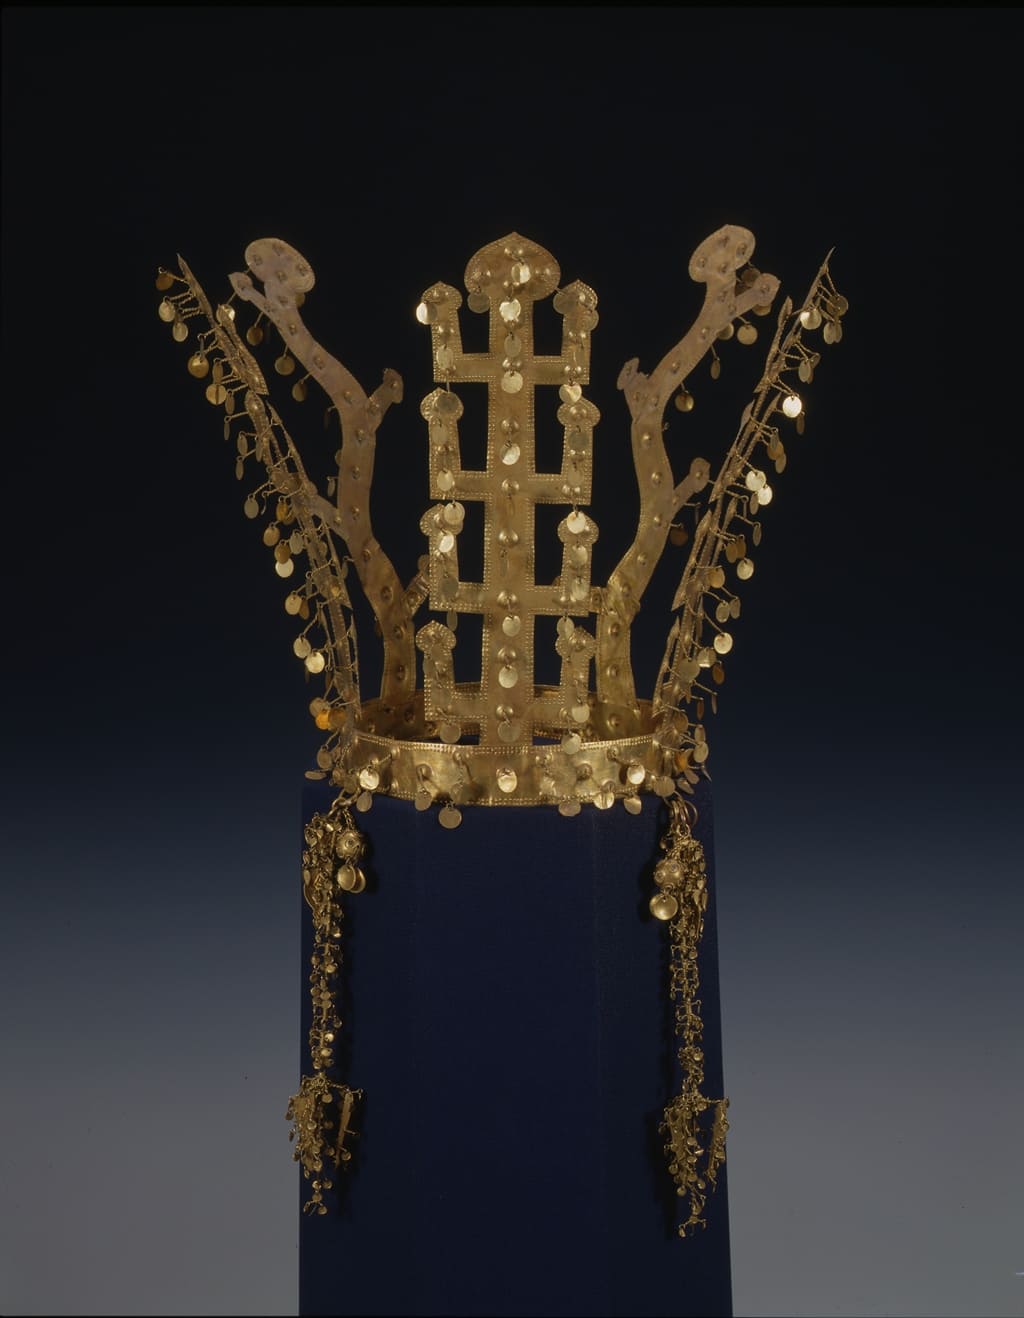 Silla gold crown